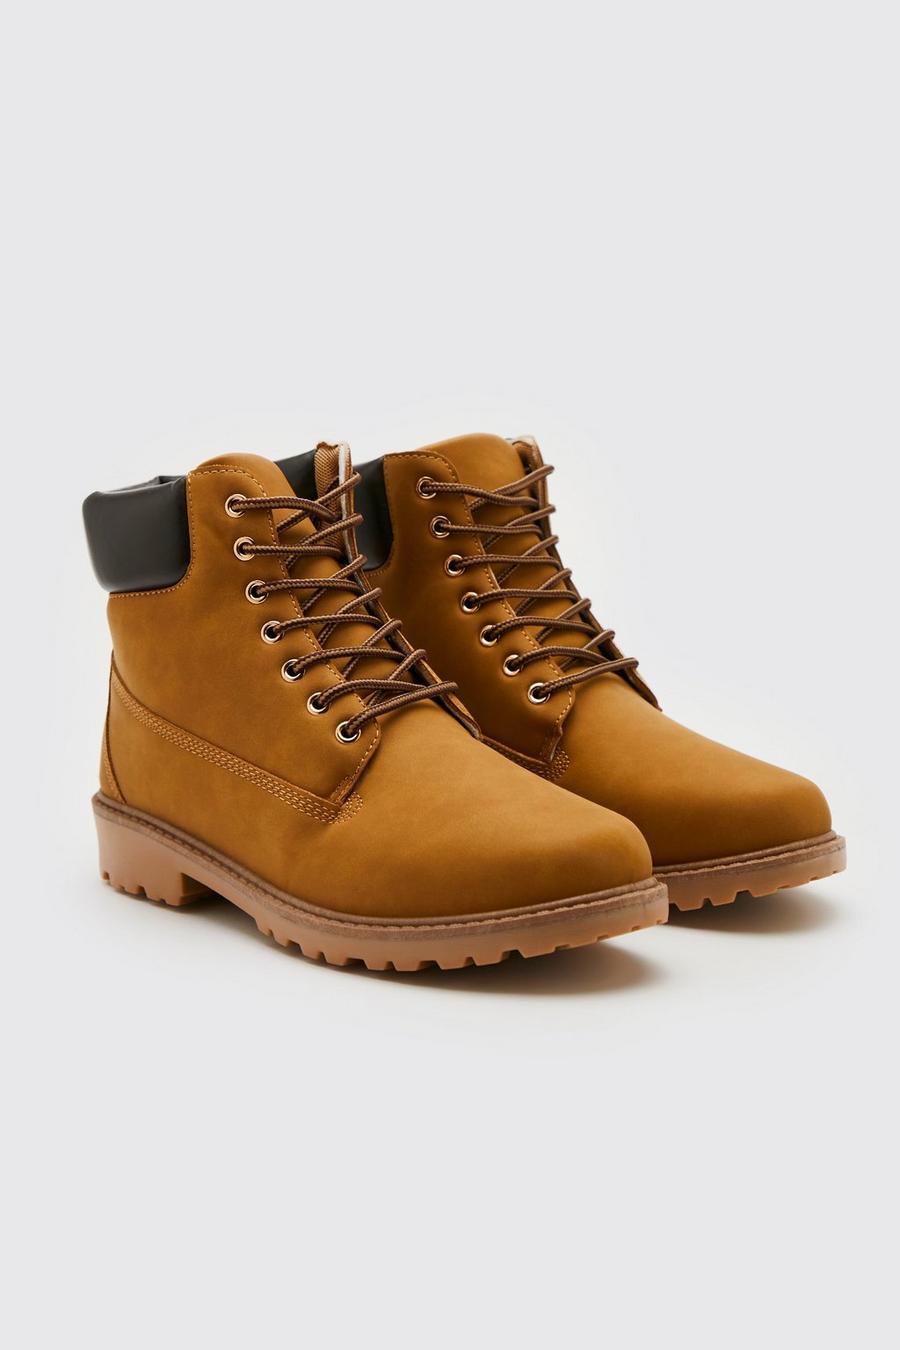 Tan marrón Worker Boots